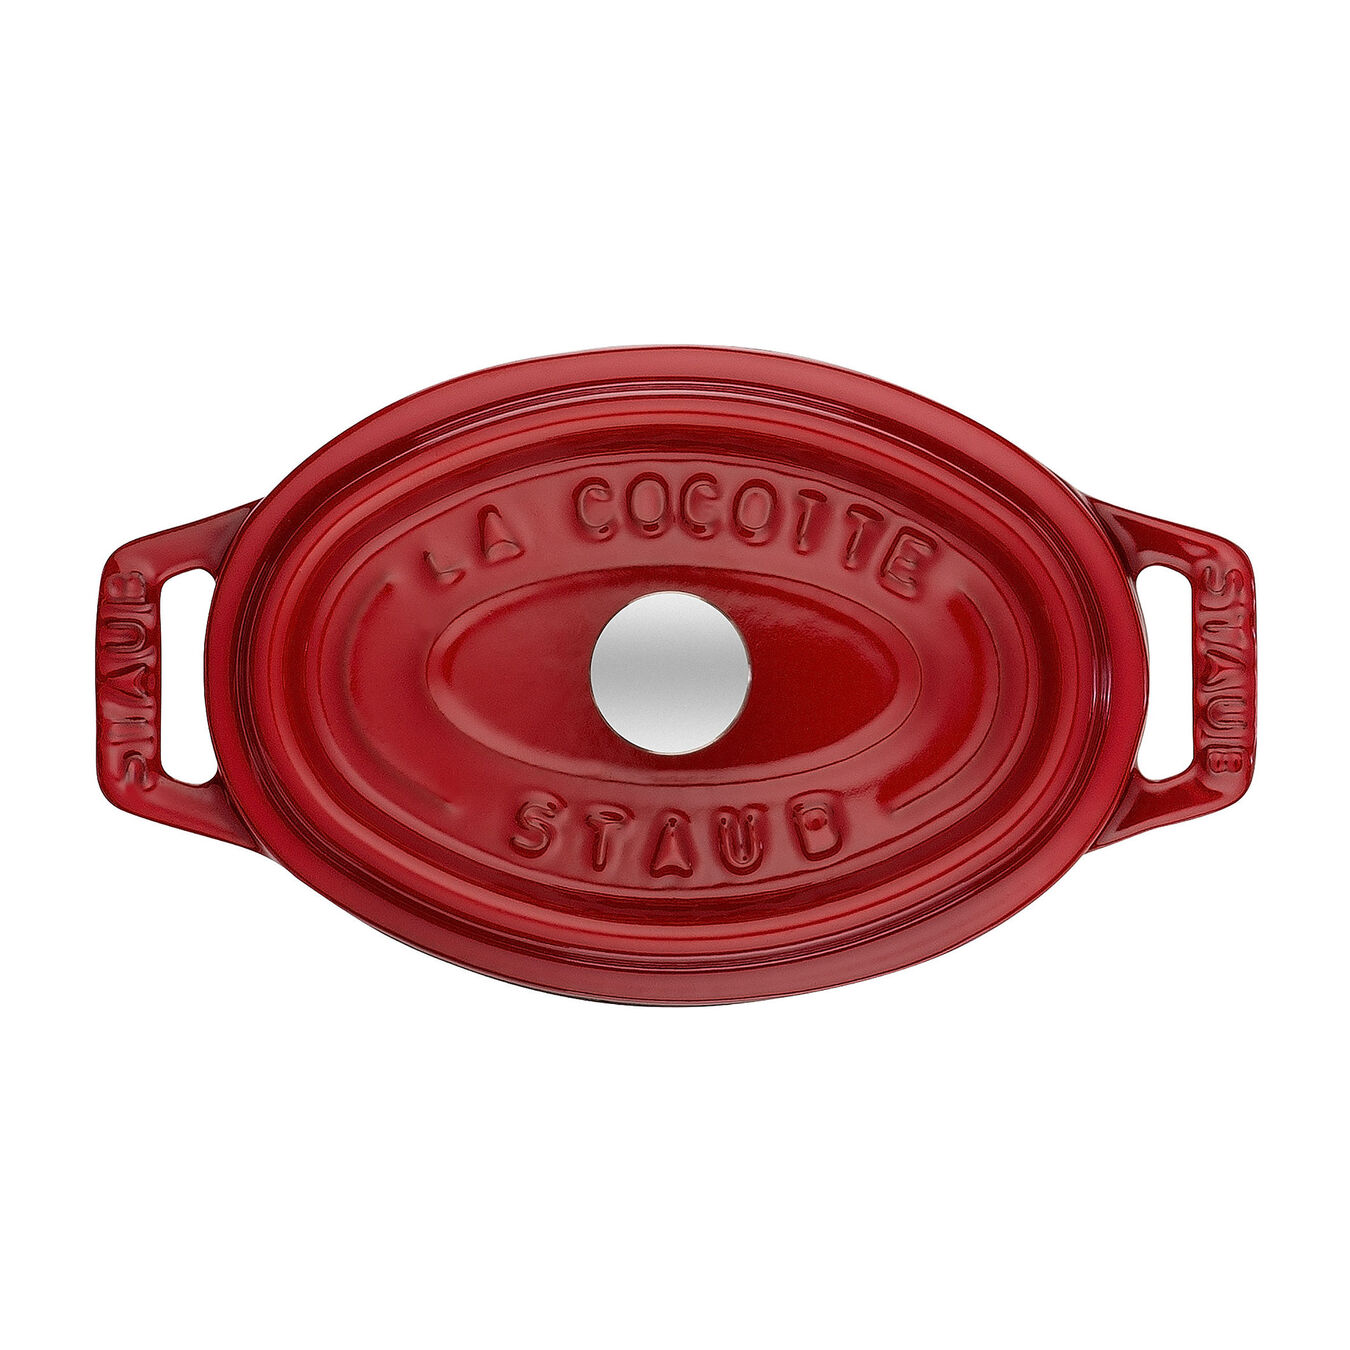 Mini cocotte ovale - 11 cm, ciliegia,,large 2